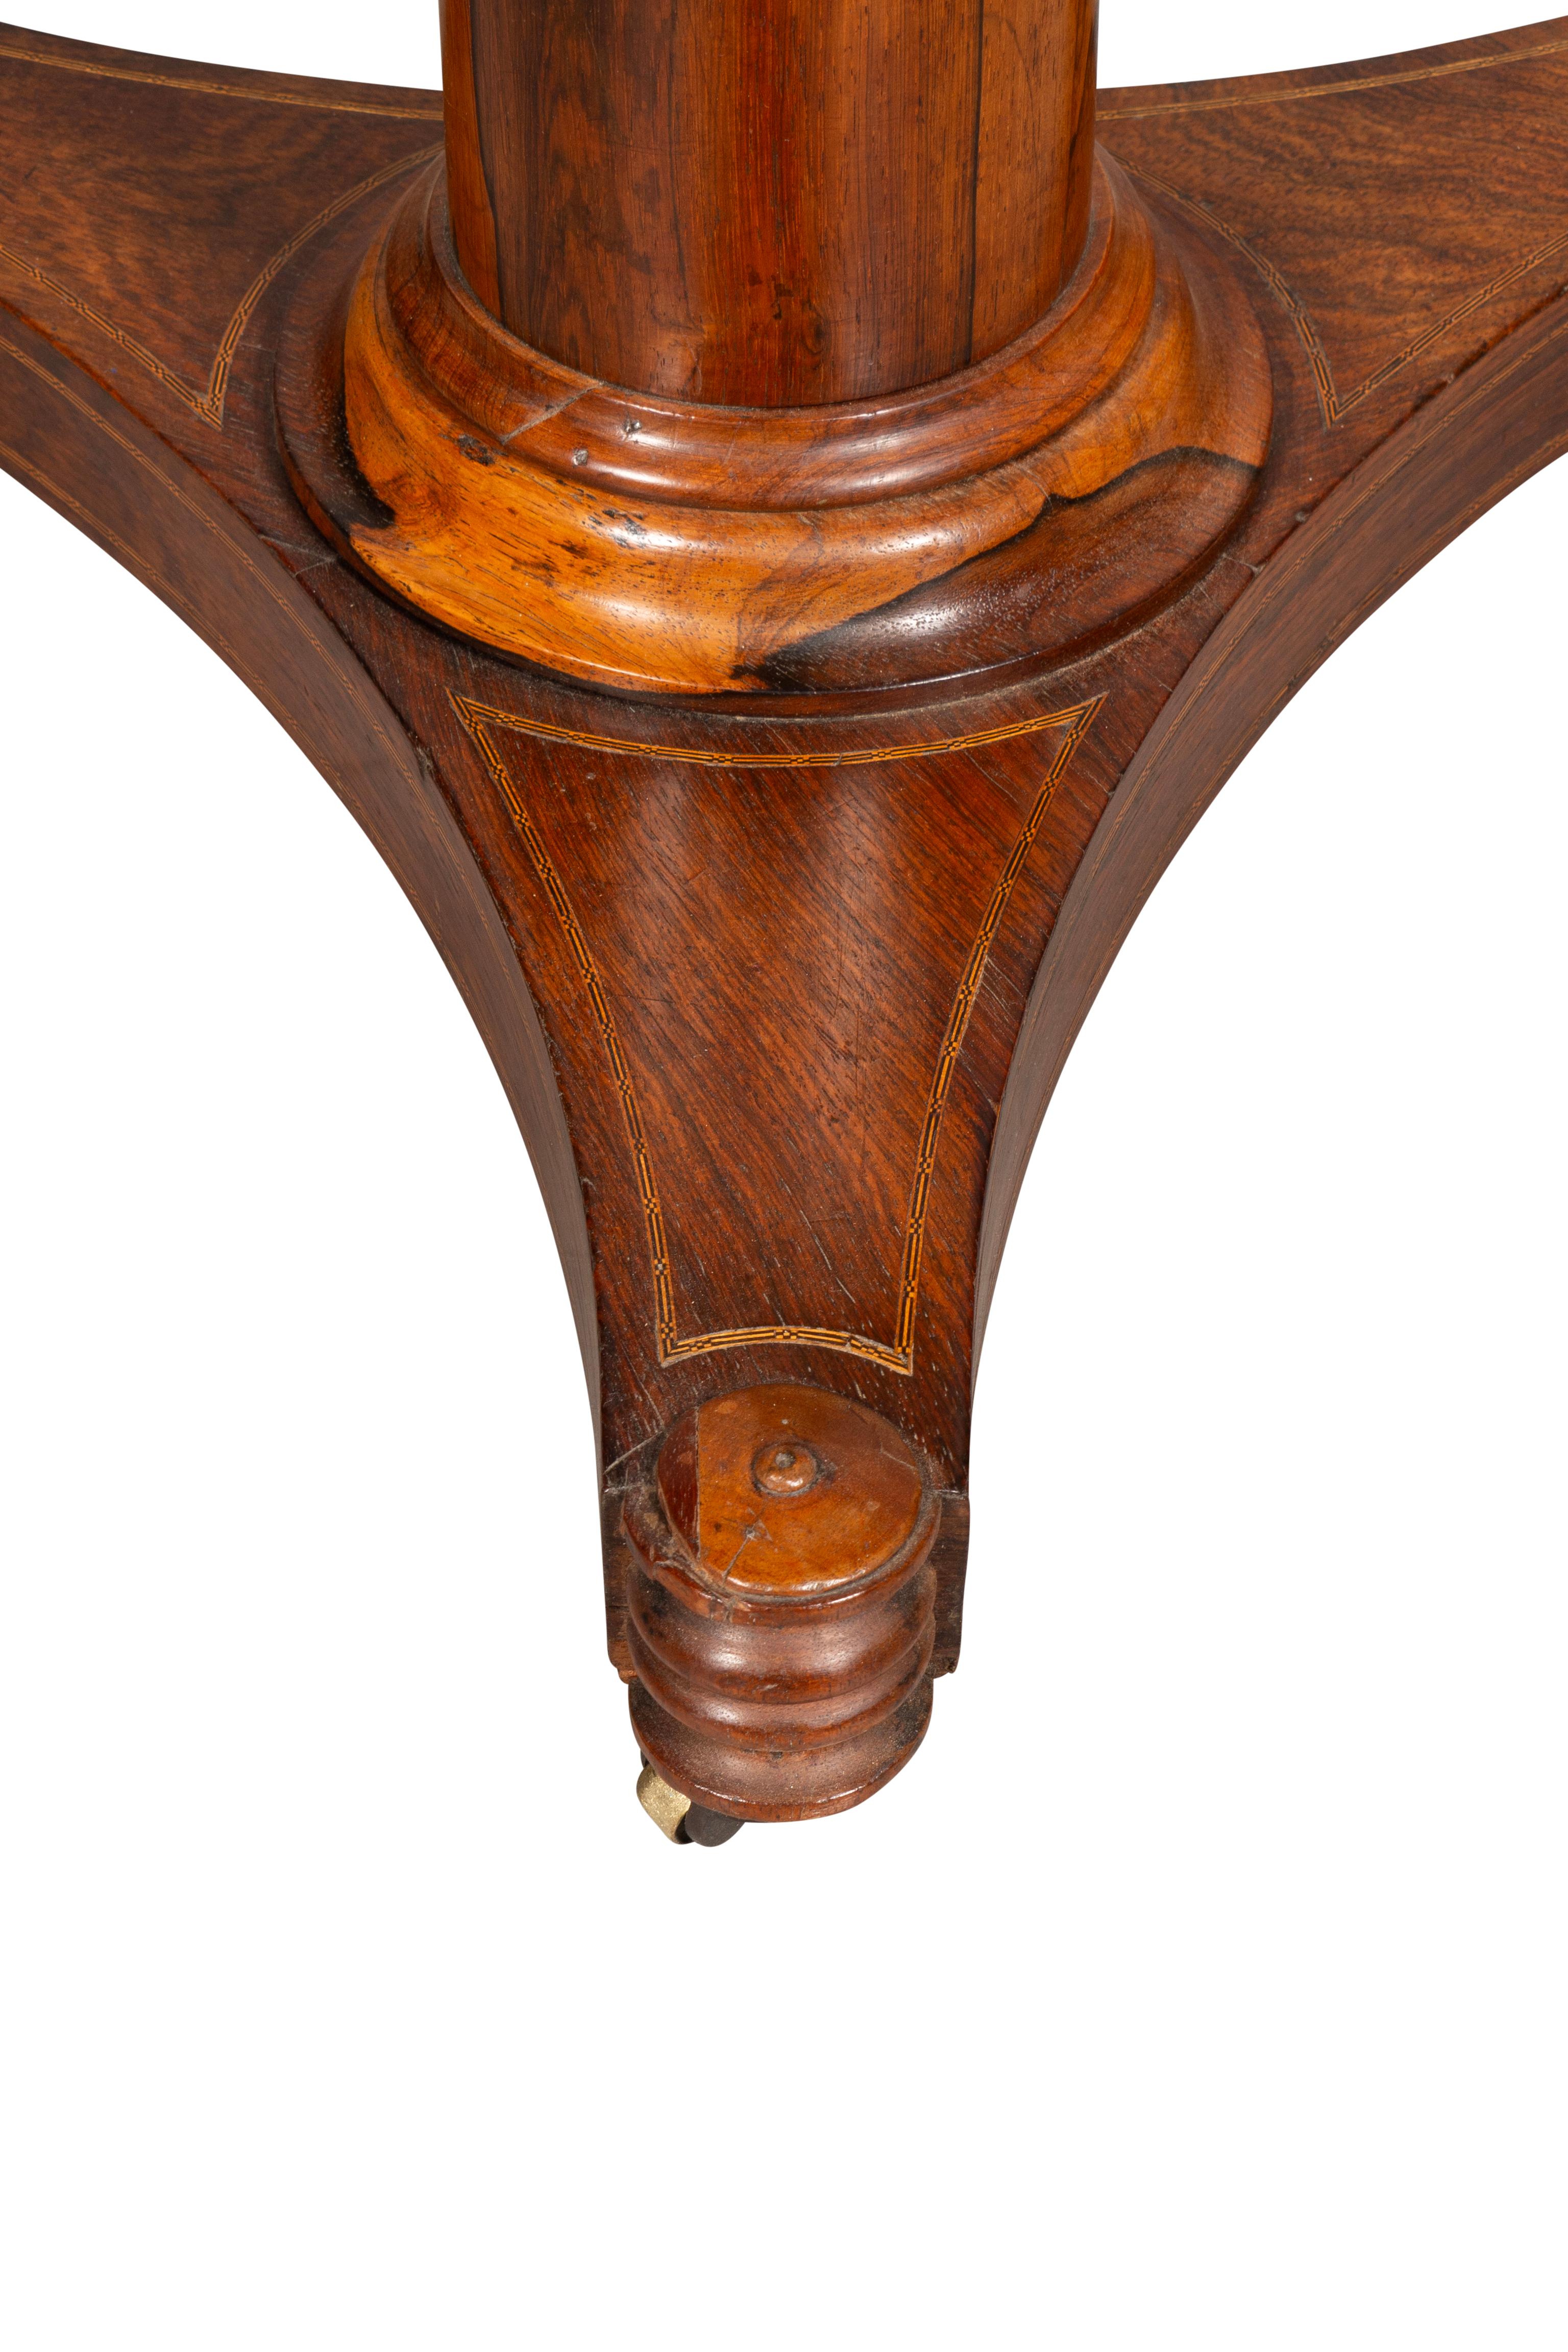 19th Century Regency Rosewood And Satinwood Inlaid Drum Table